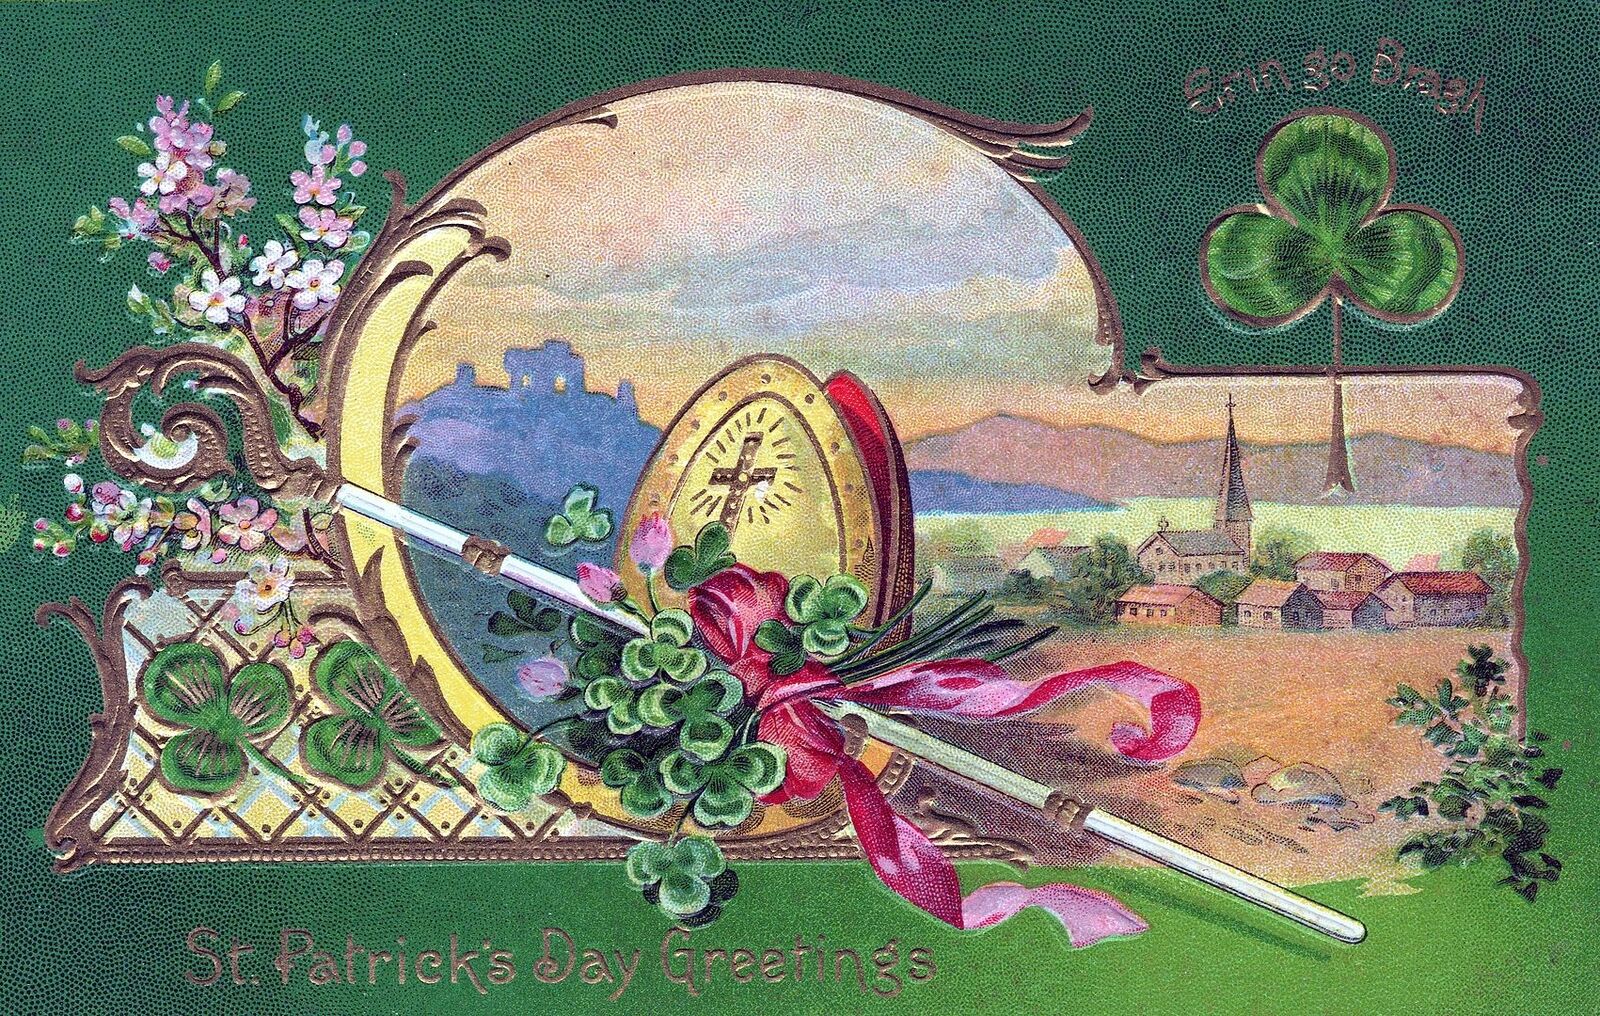 ST. PATRICK'S DAY - St. Patrick's Day Greetings Postcard